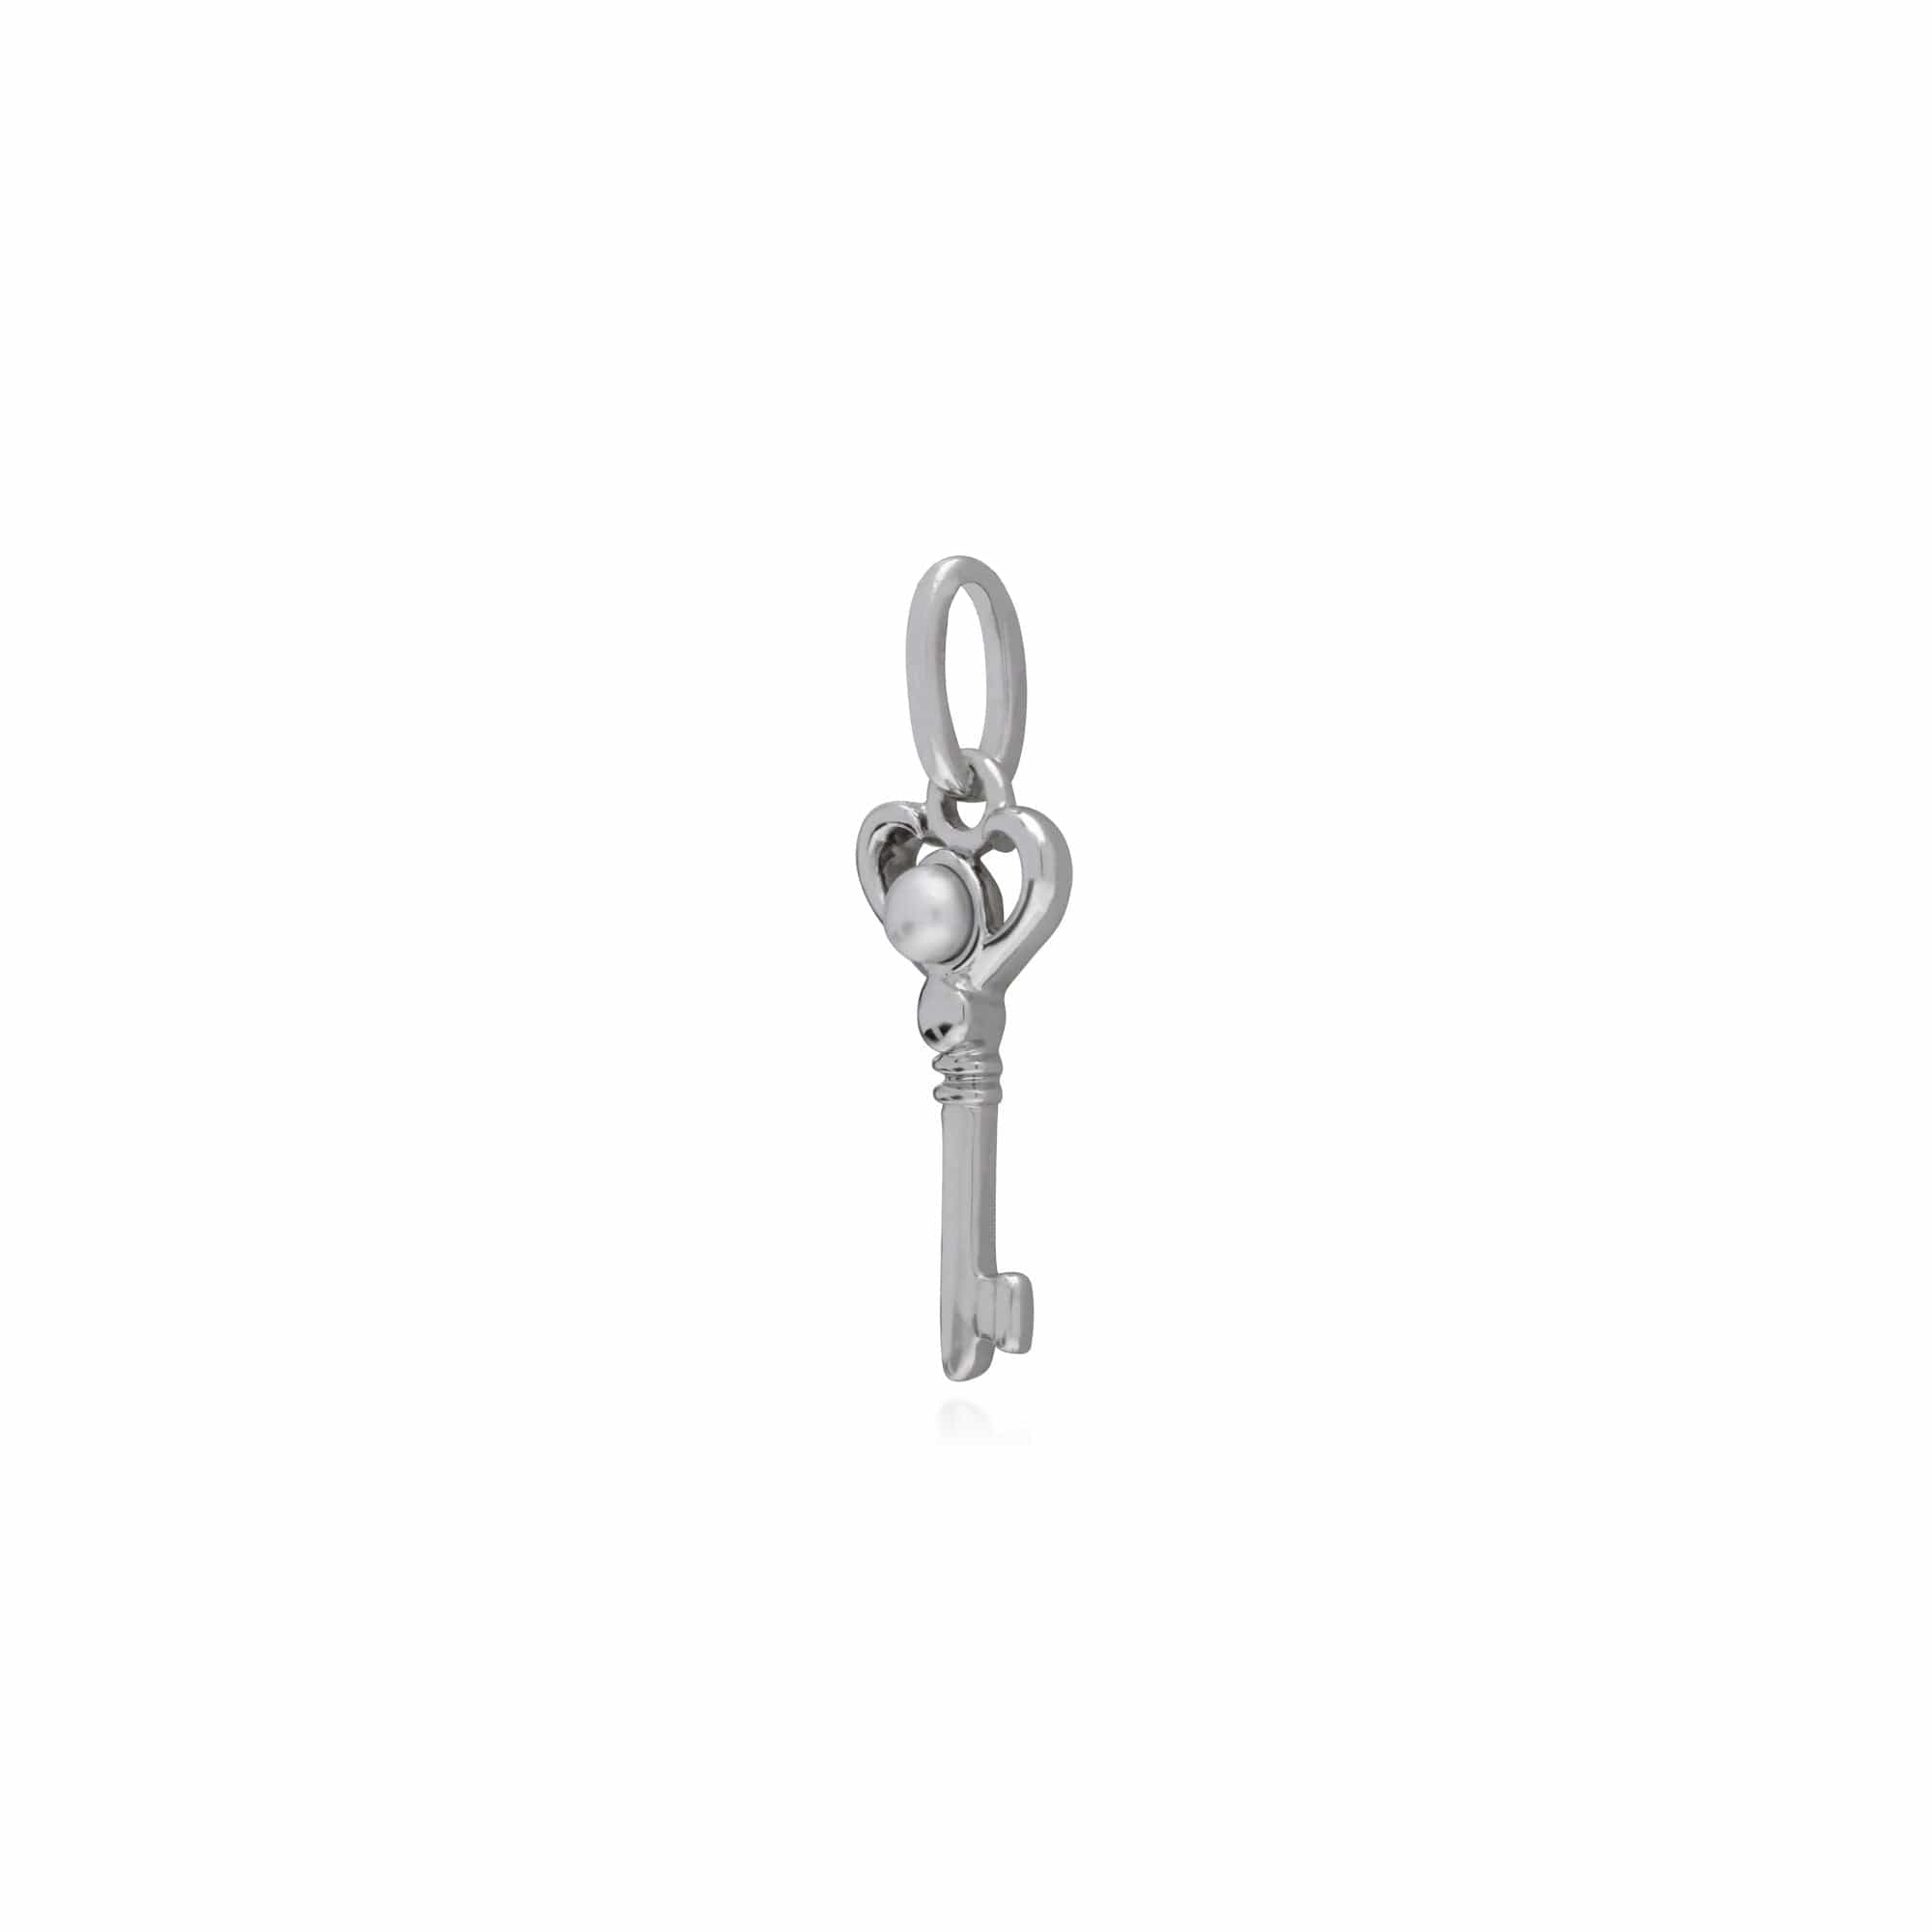 Gemondo Sterling Silver Pearl Small Key Charm - Gemondo